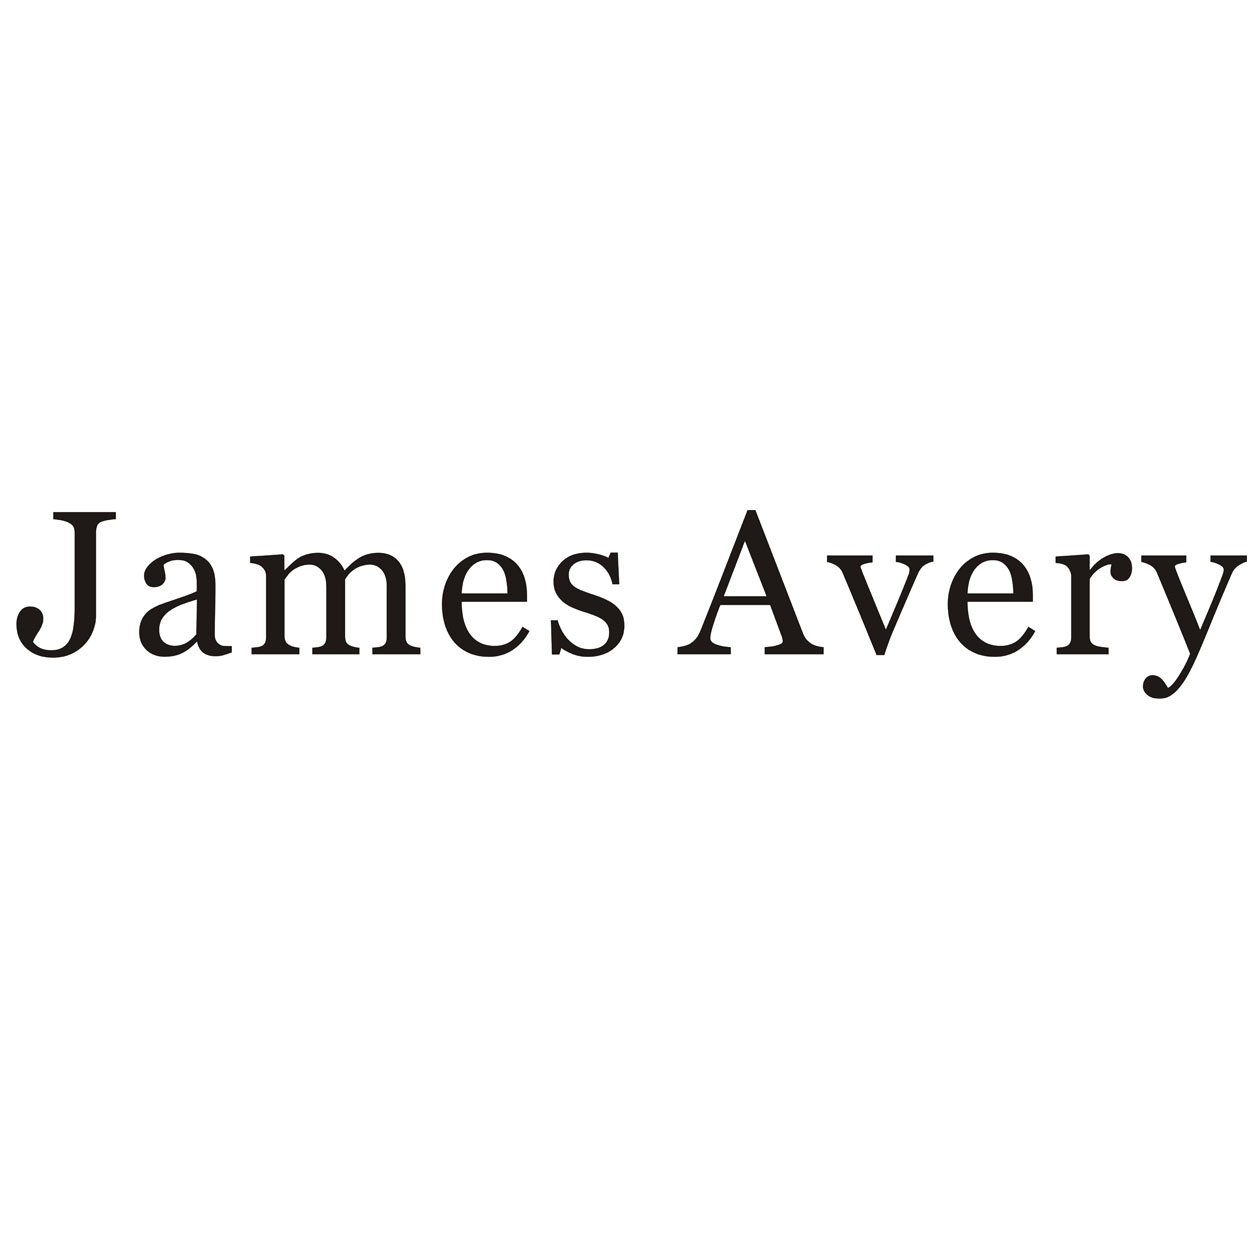 JAMES AVERY